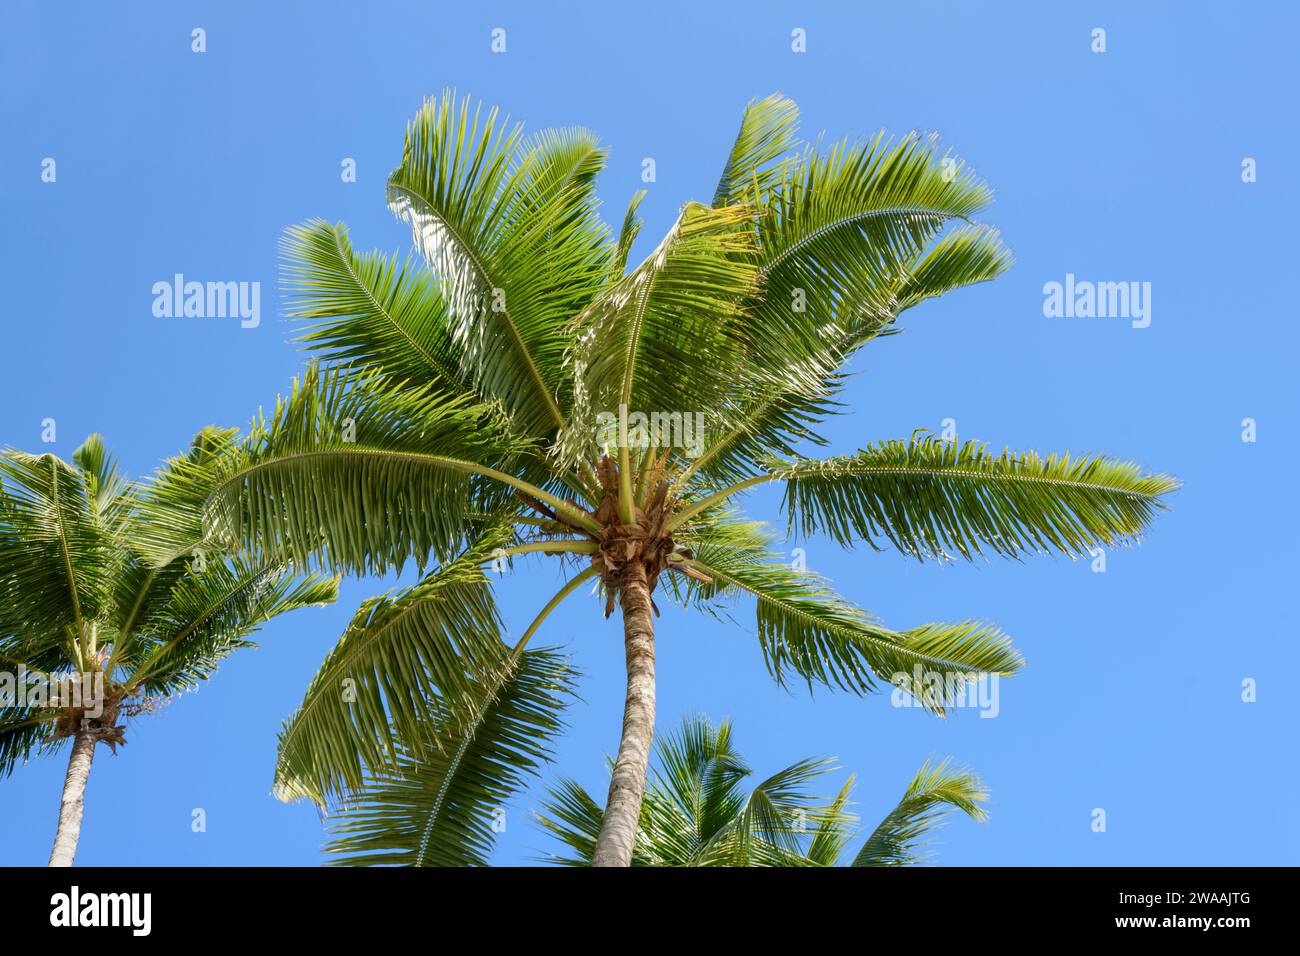 Coconut palm trees set against a blue sky, Praslin Island, Seychelles. Indian Ocean Stock Photo